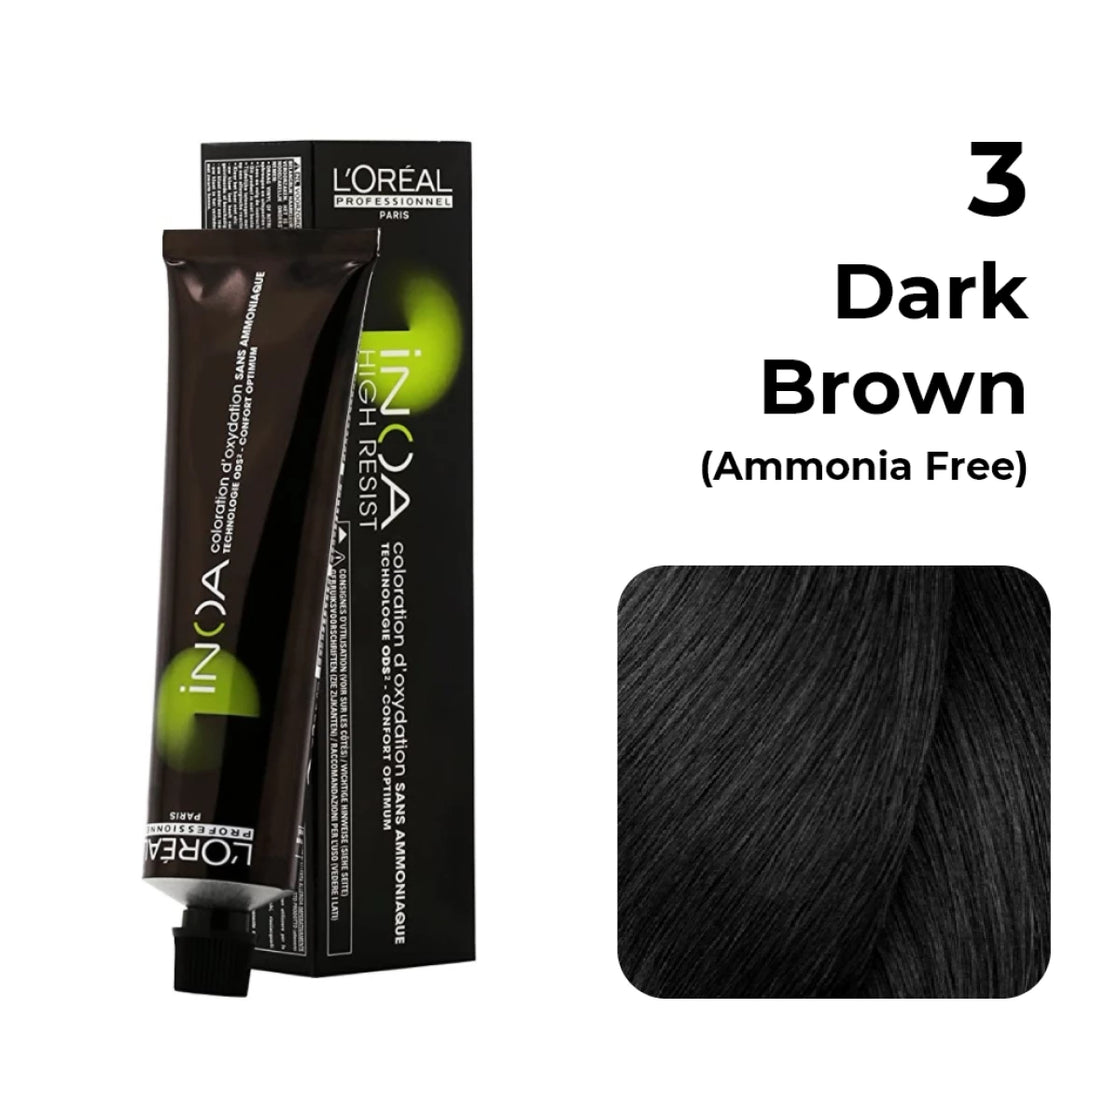 Loreal Inoa Ammonia Free Hair Color 3 Dark Brown 2pcs +Developer Allure Dye Brush HD-01Combo